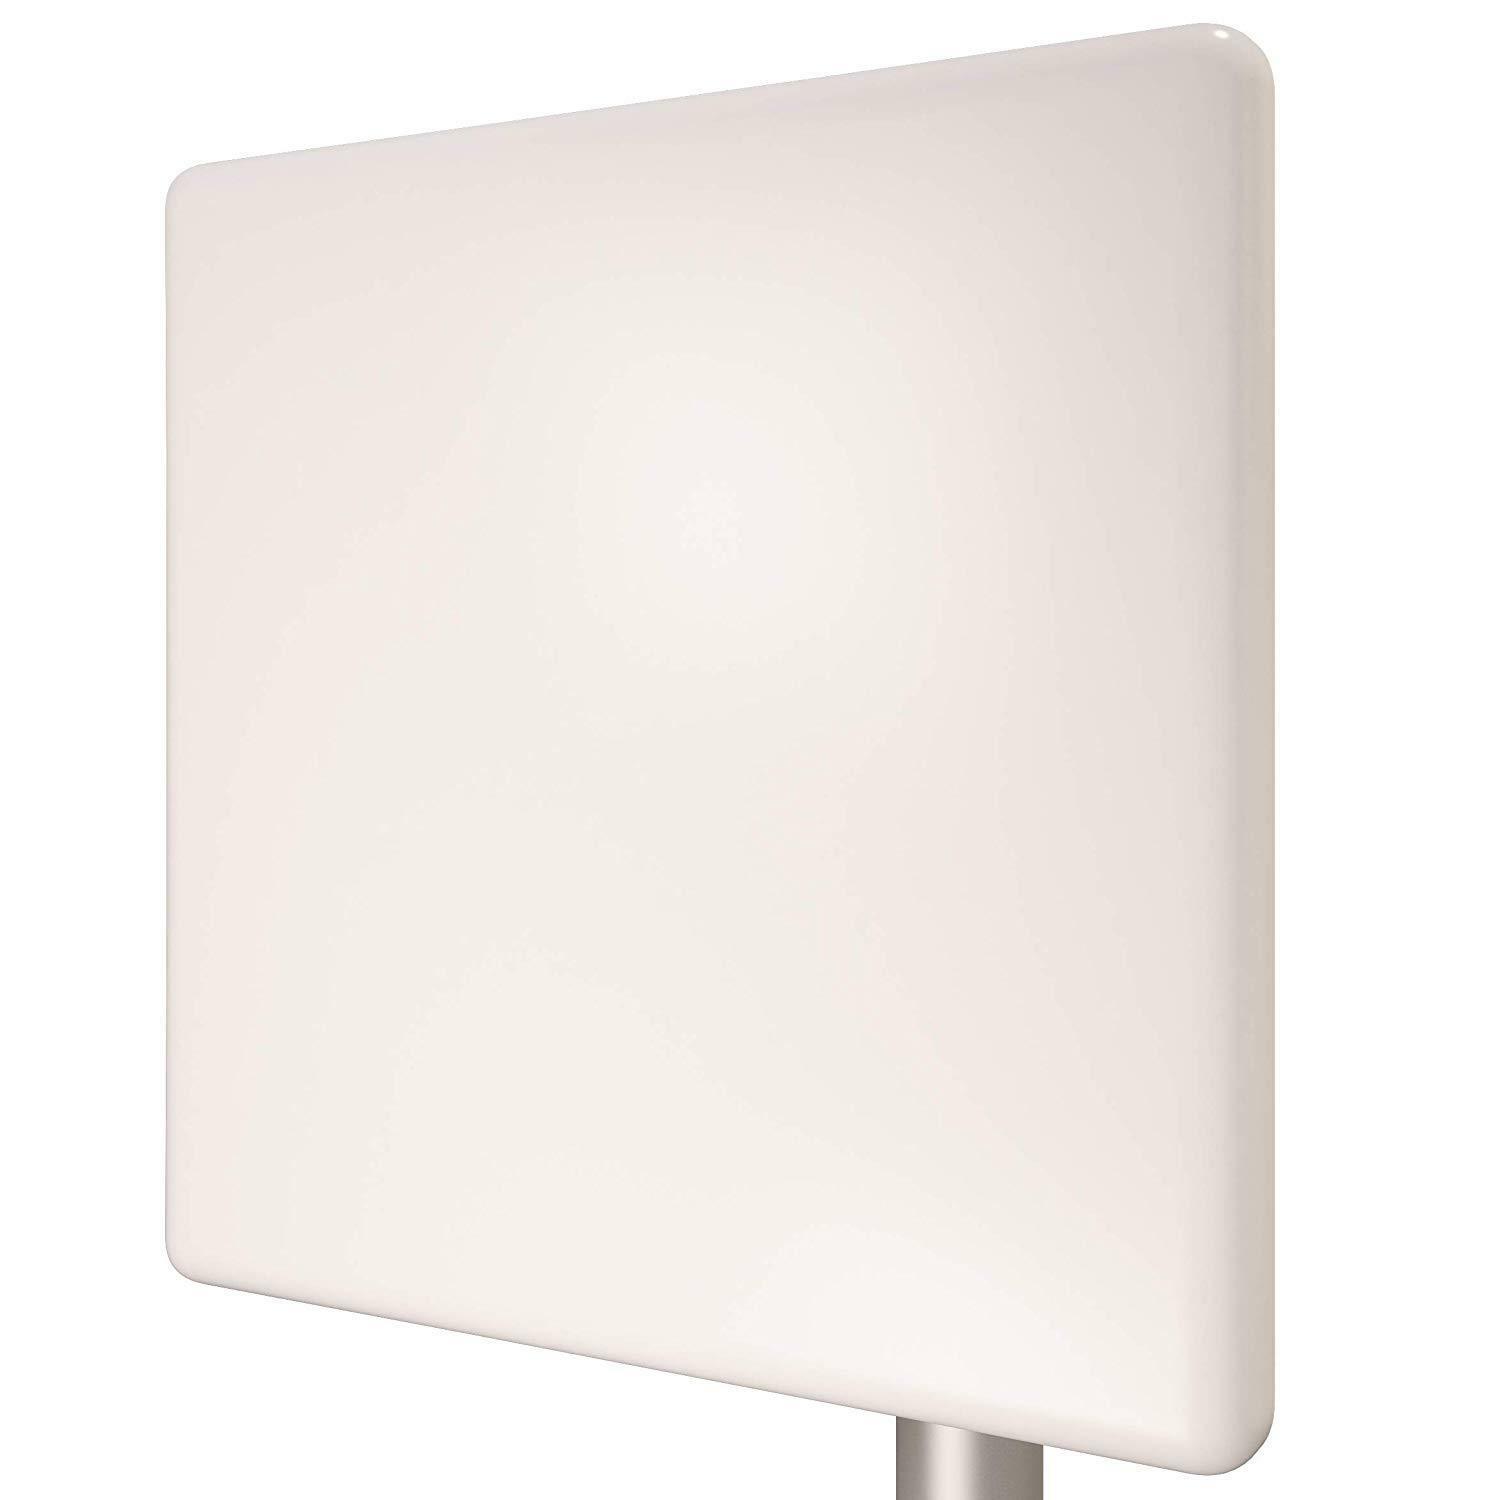 Panel Antenna 2.4GHz WiFi 20dBi Wireless Outdoor 18° Directional N (f) High Gain